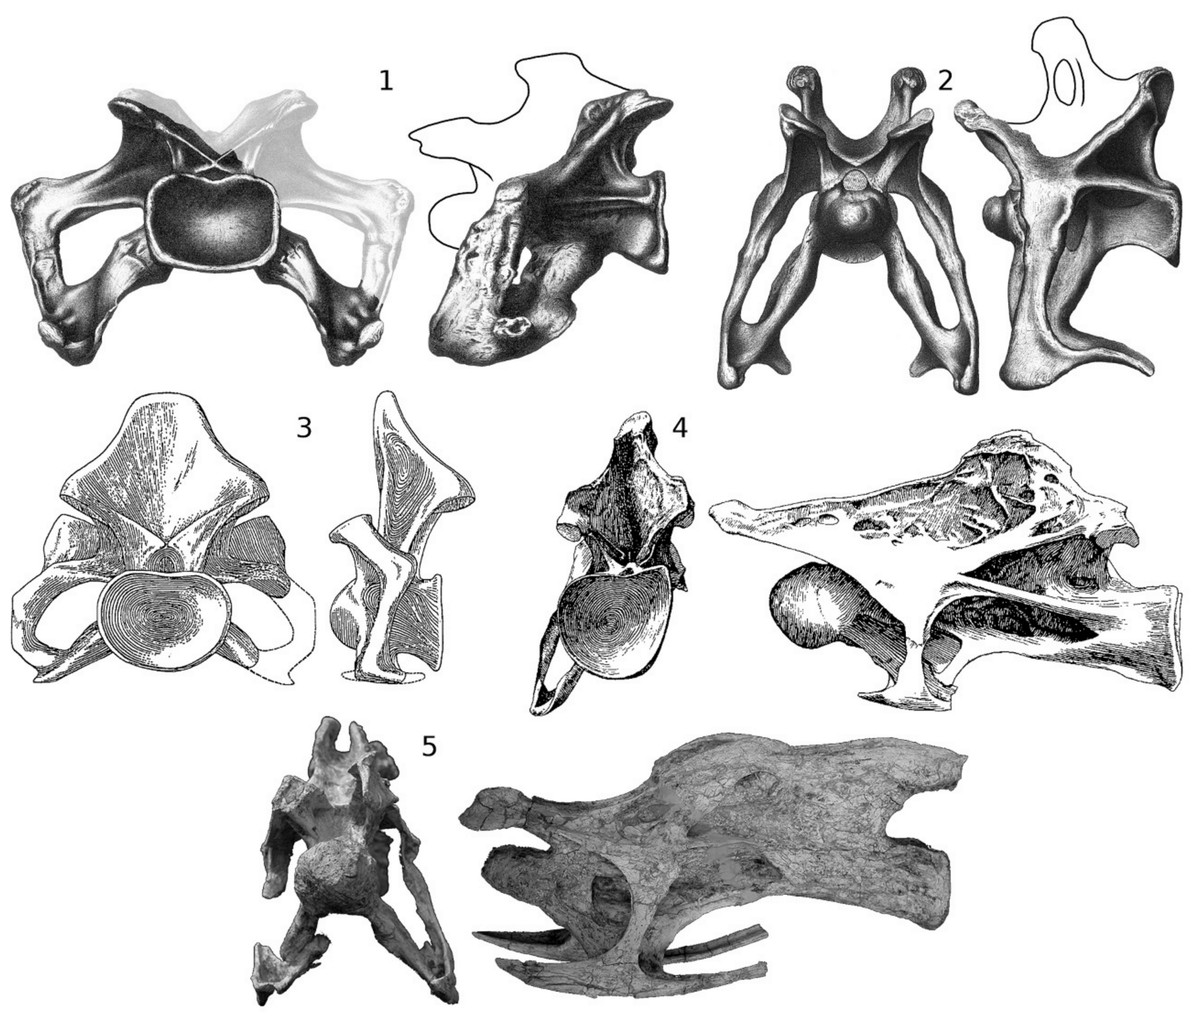 299 Pterodactyloidea Images, Stock Photos, 3D objects, & Vectors